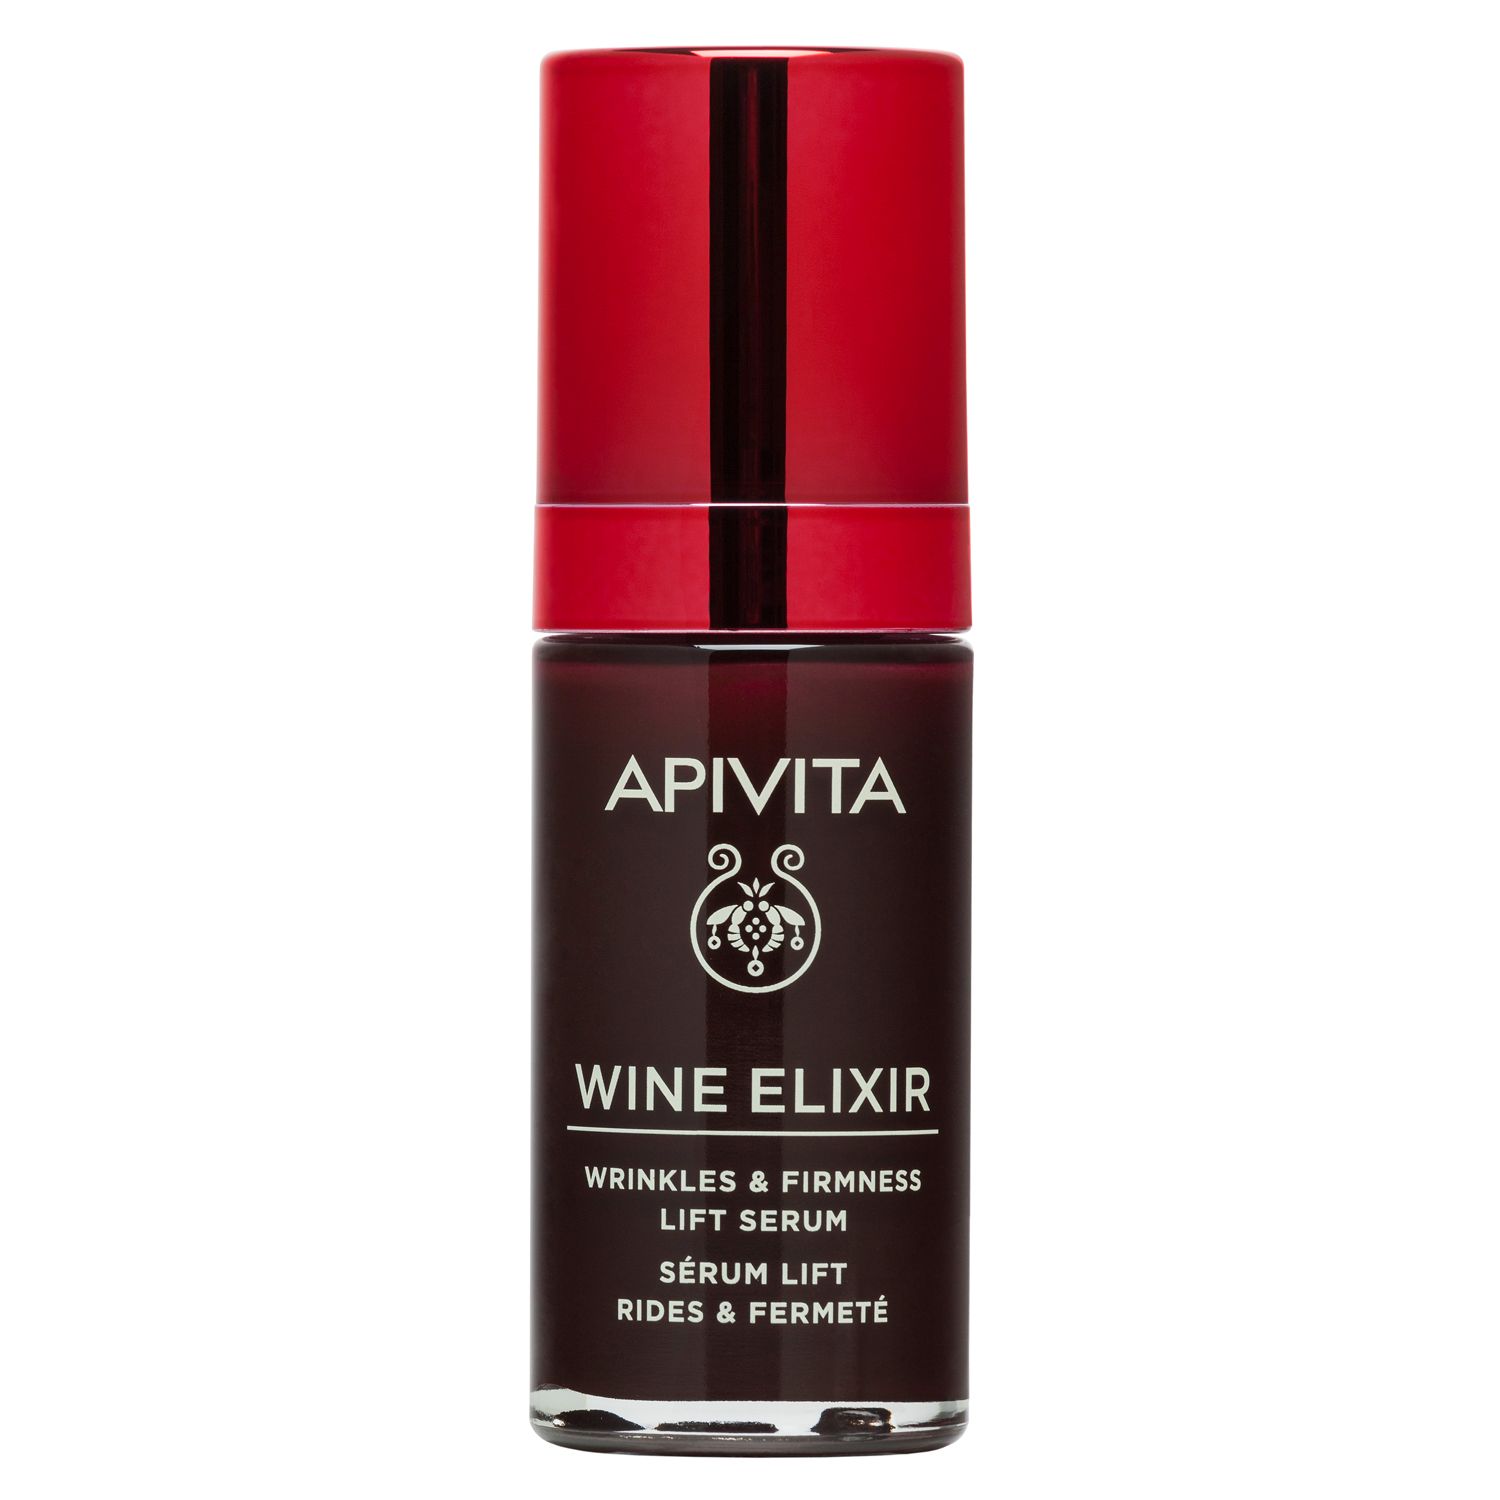 Image of APIVITA Wine Elixir Siero Liftante Rughe & Compattezza